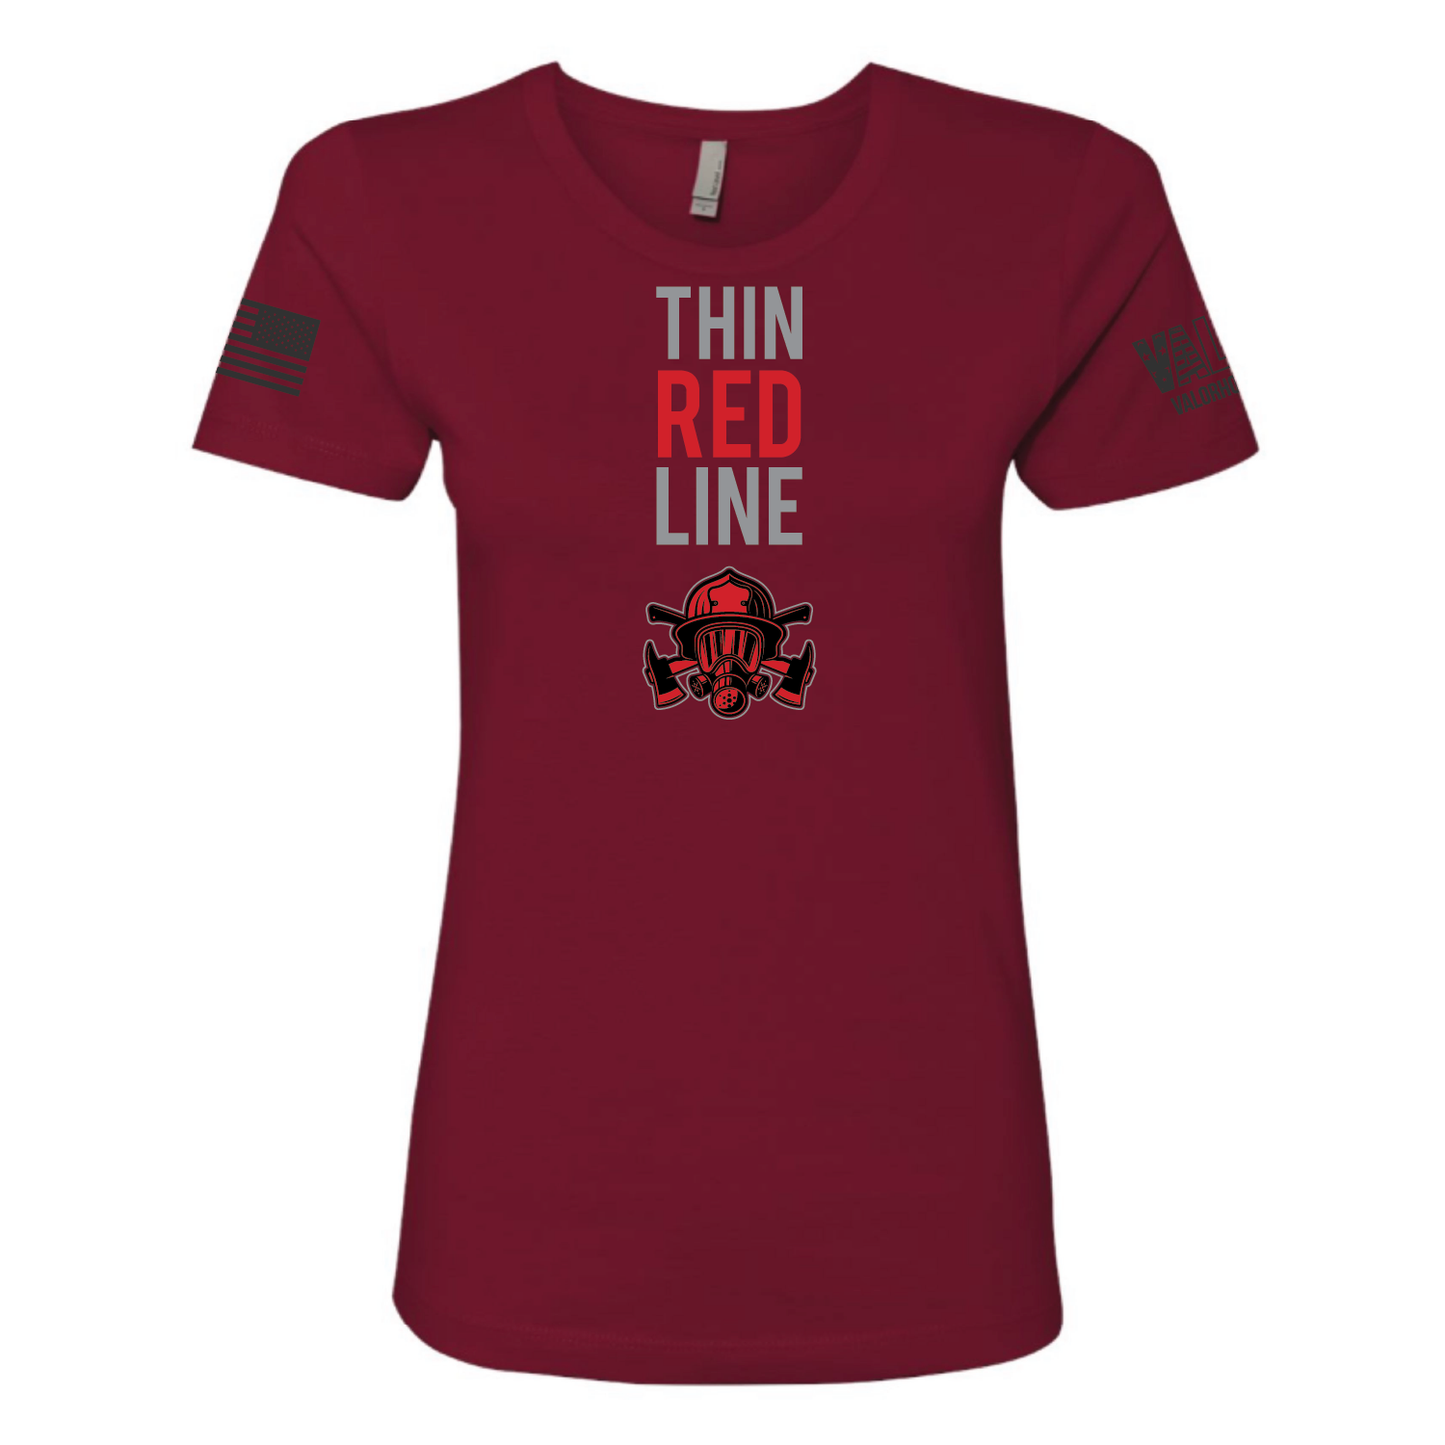 Ladies "Thin Red Line" Shirt